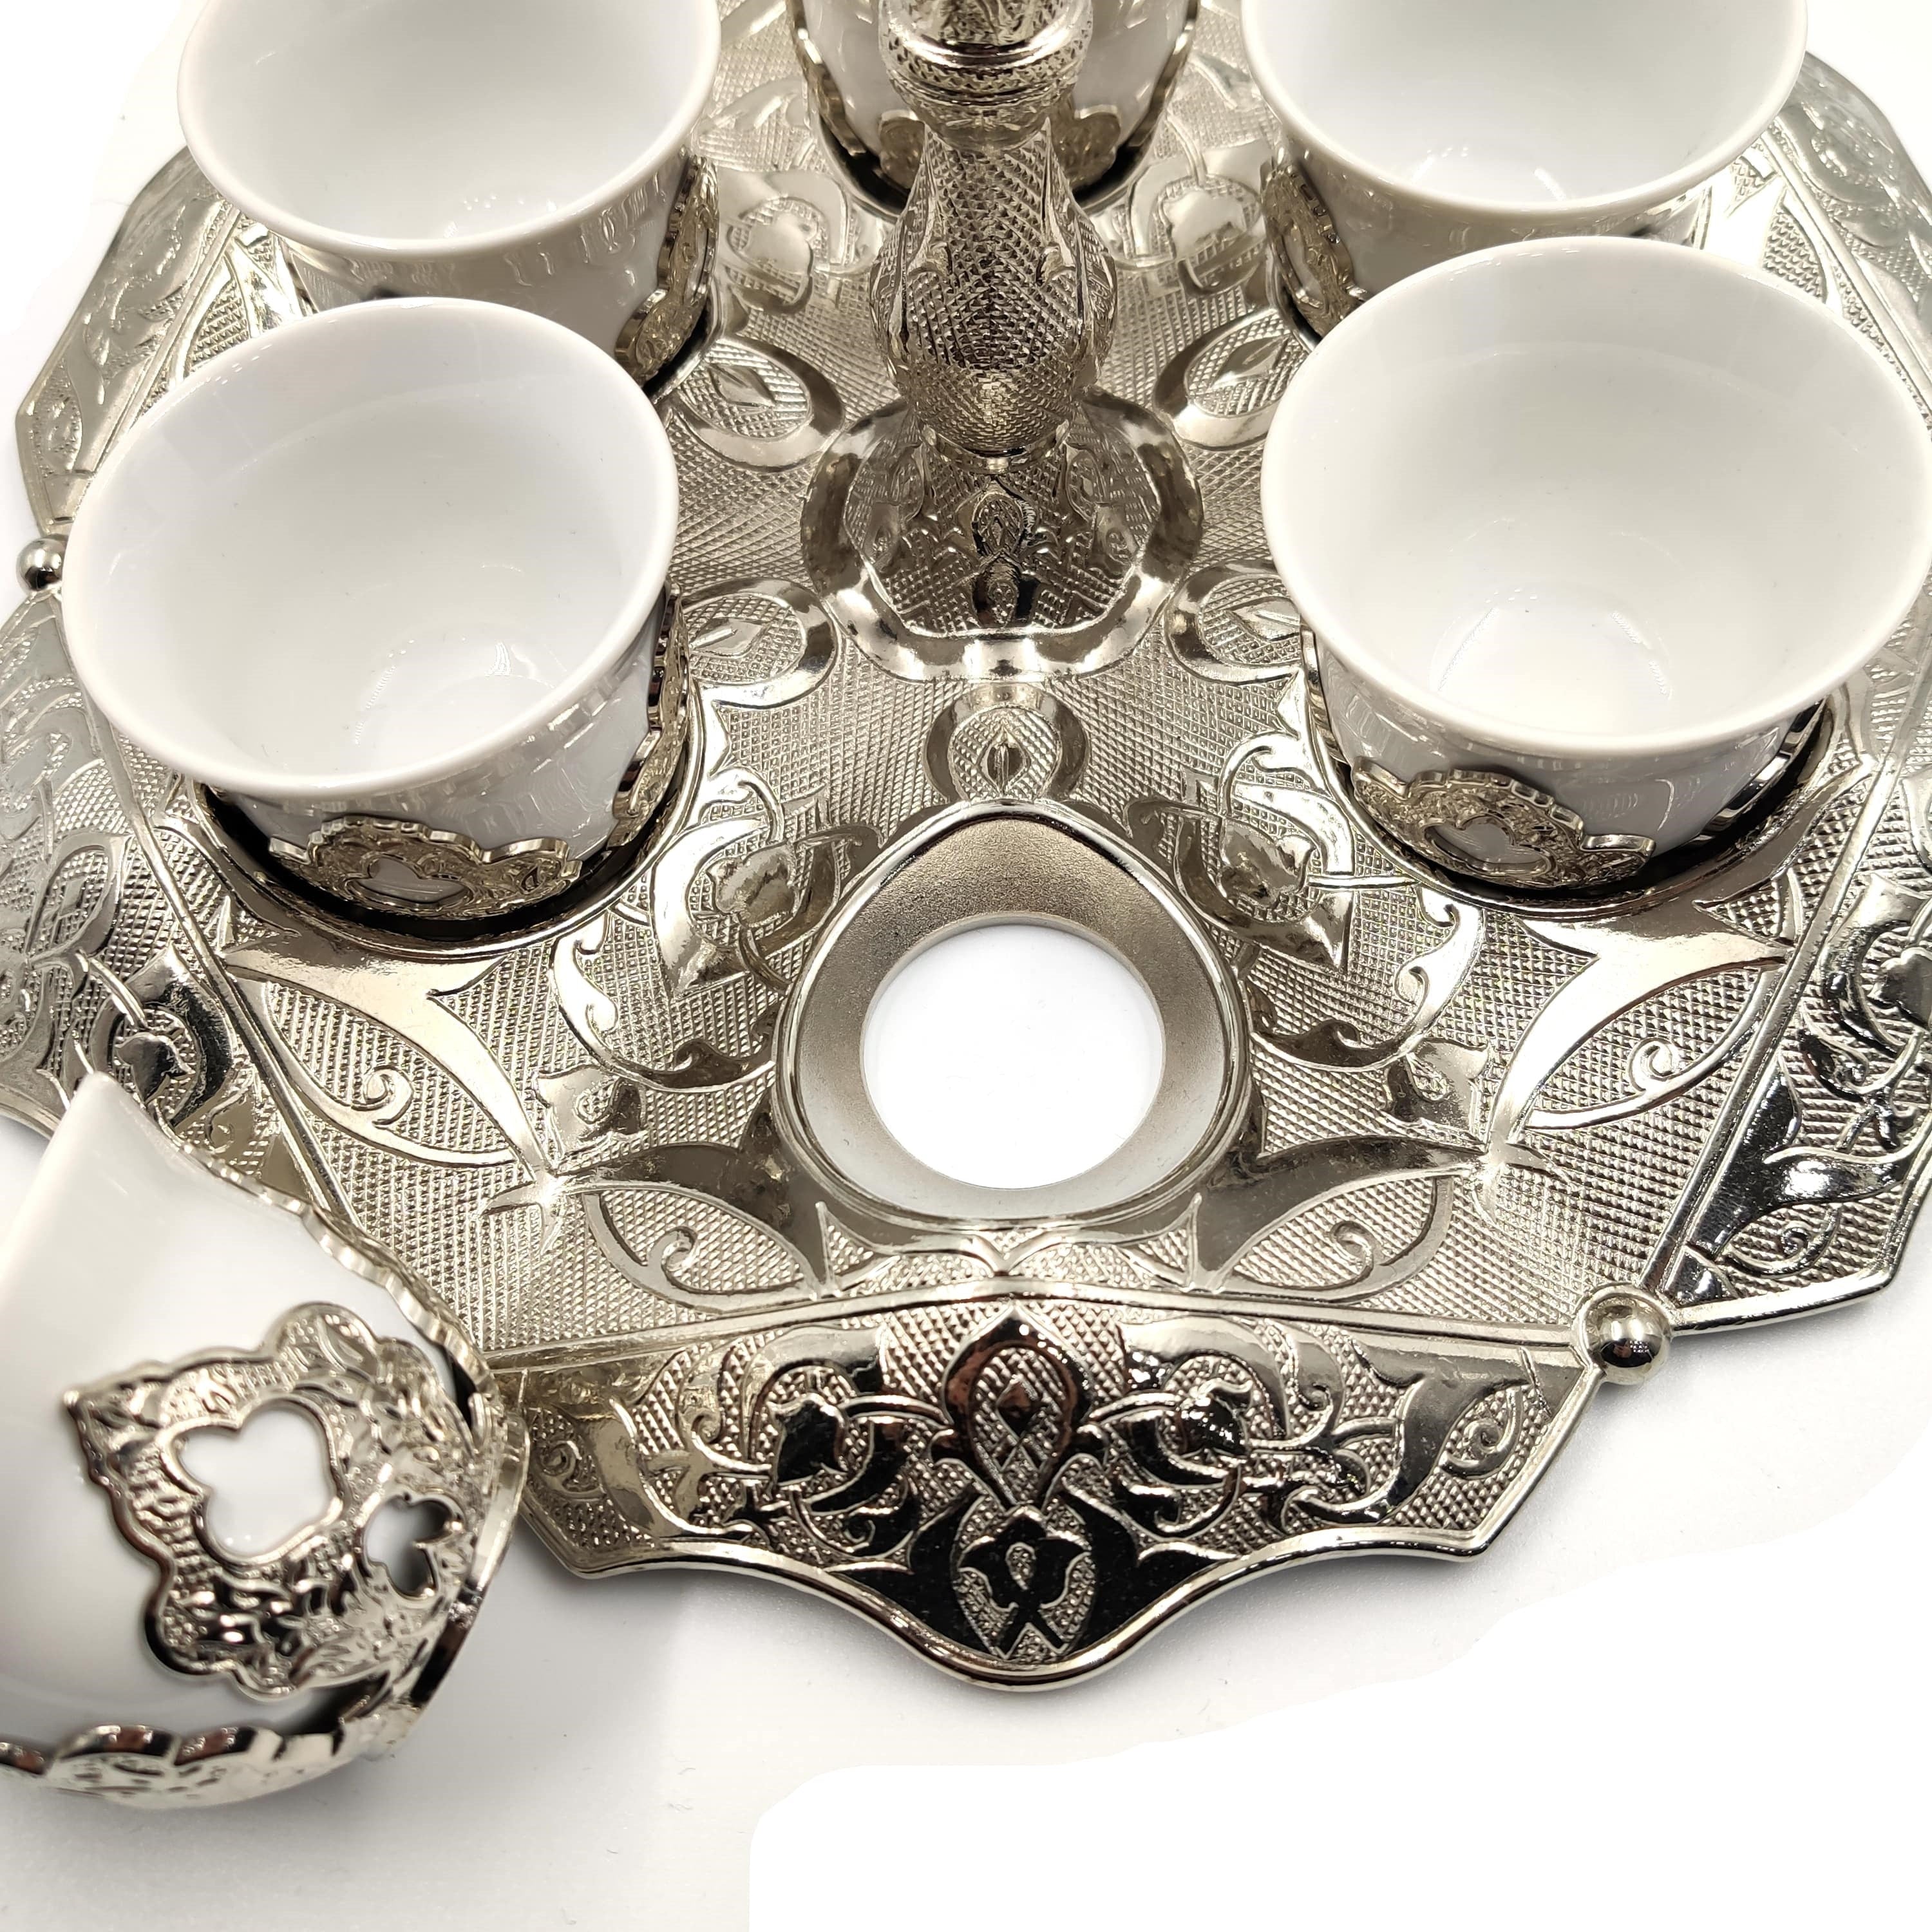 Set of 6 English Silver Plated Coffee Set Mırra, Greek, arabic Coffee Serving Cups Set in Espresso Made in Turkey